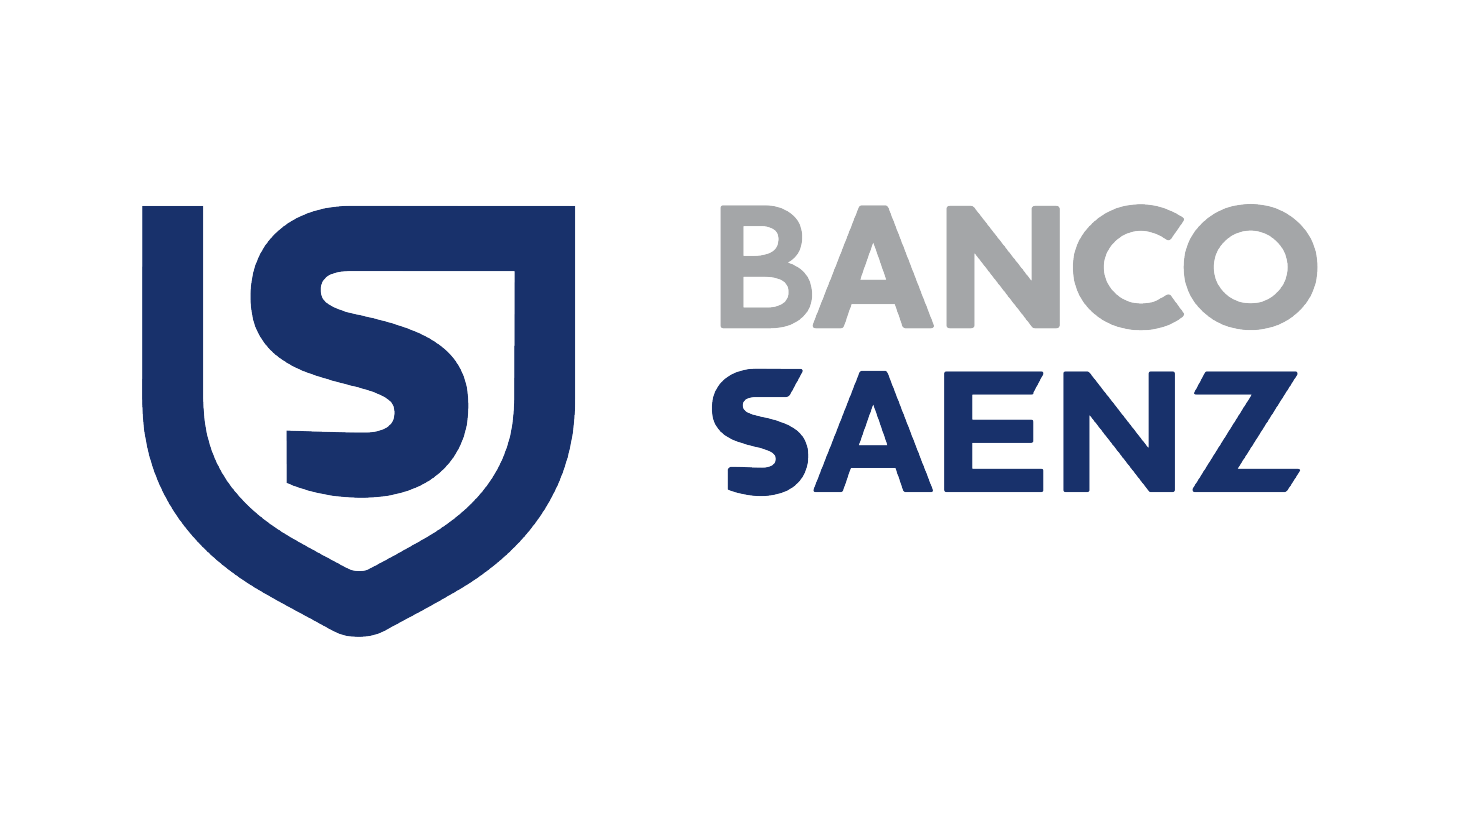 Banco Saenz logo